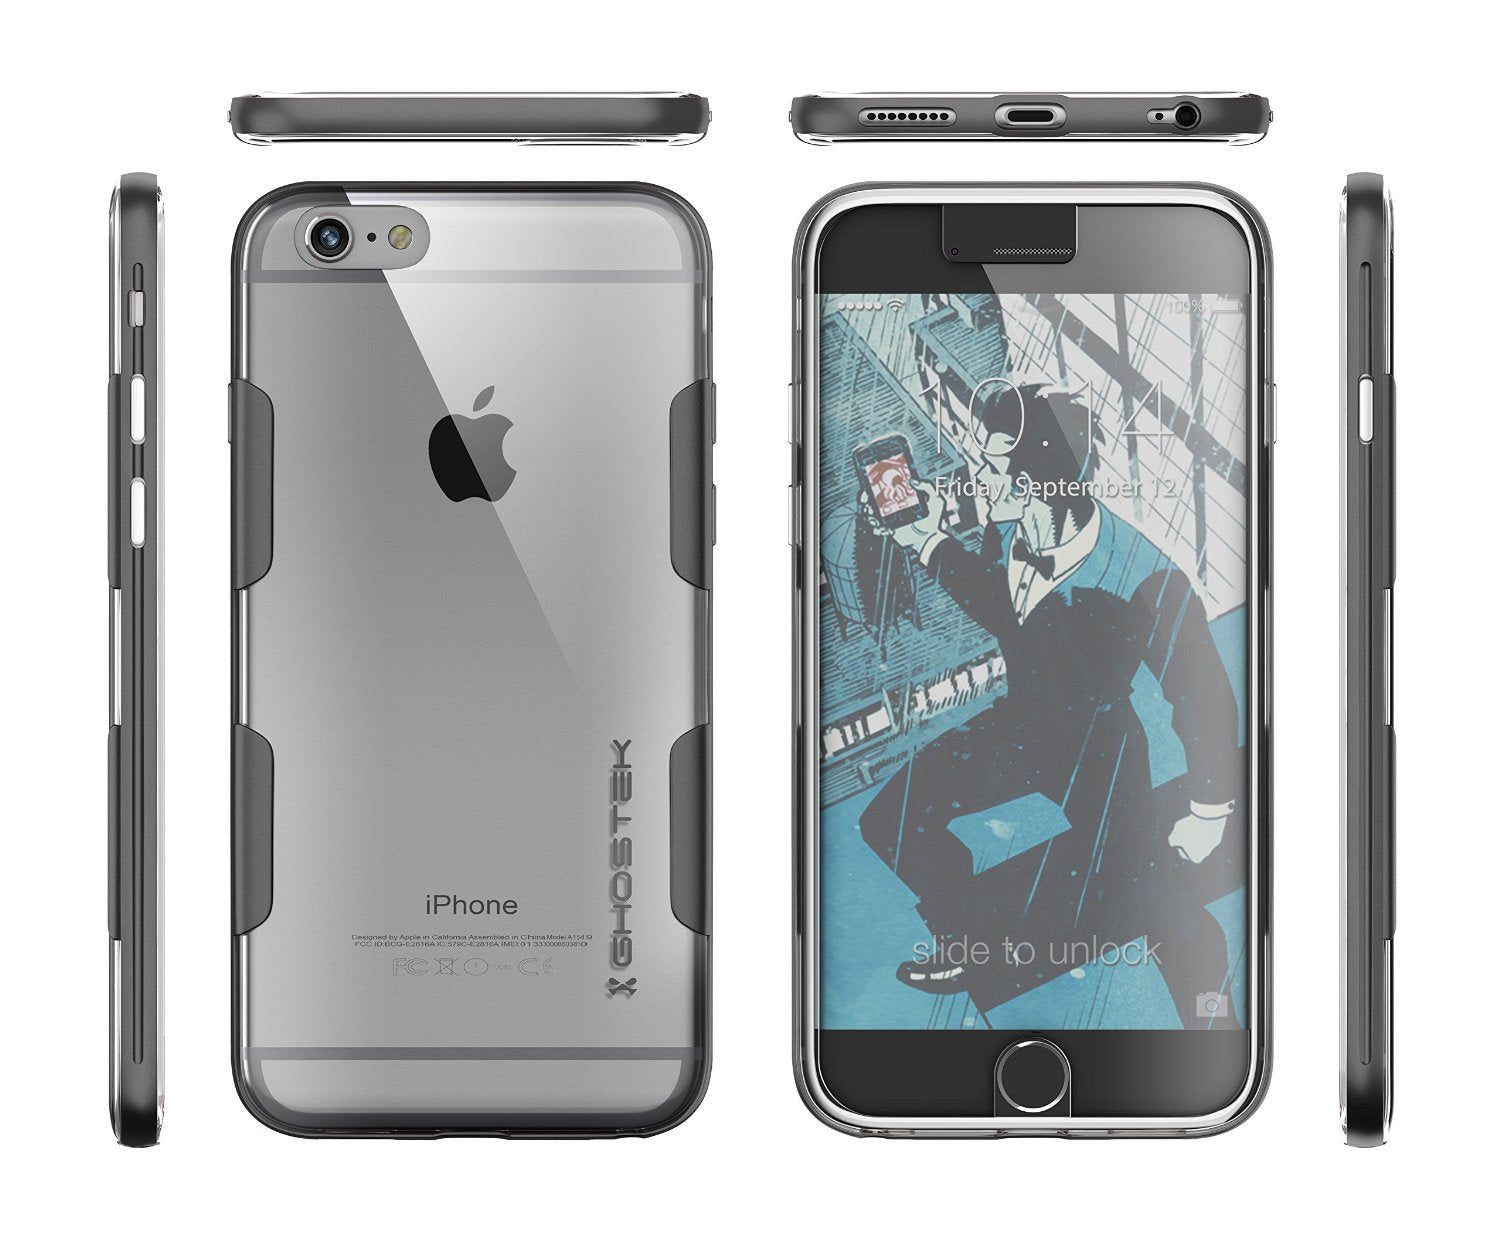 iPhone 6s Plus Case Space Grey Ghostek Cloak, Slim Protective w/ Tempered Glass | Lifetime Warranty - PunkCase NZ